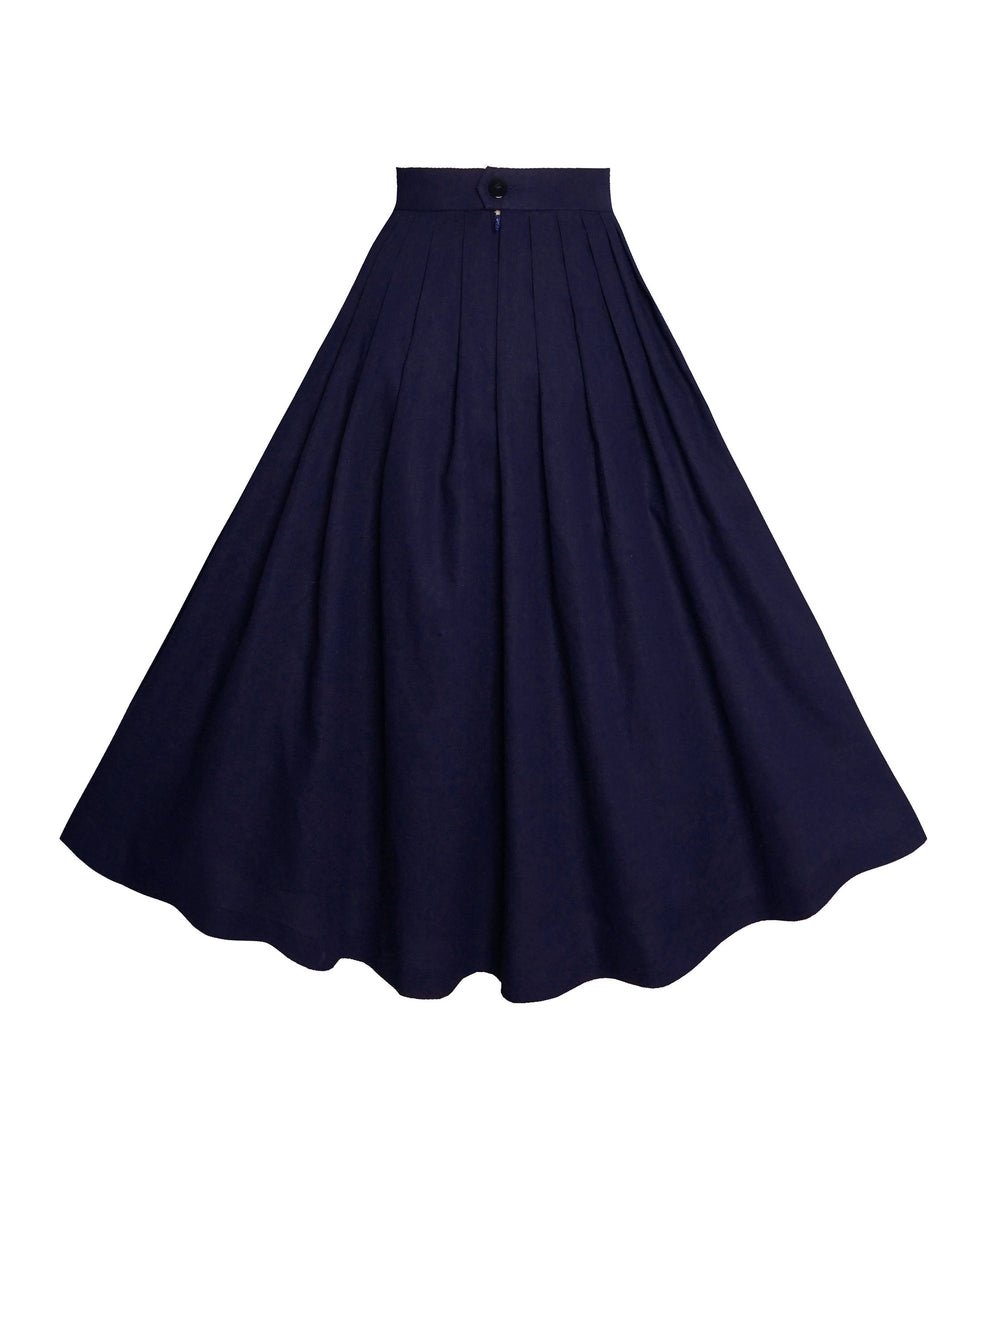 MTO - Ruby Skirt in Indigo Blue Linen